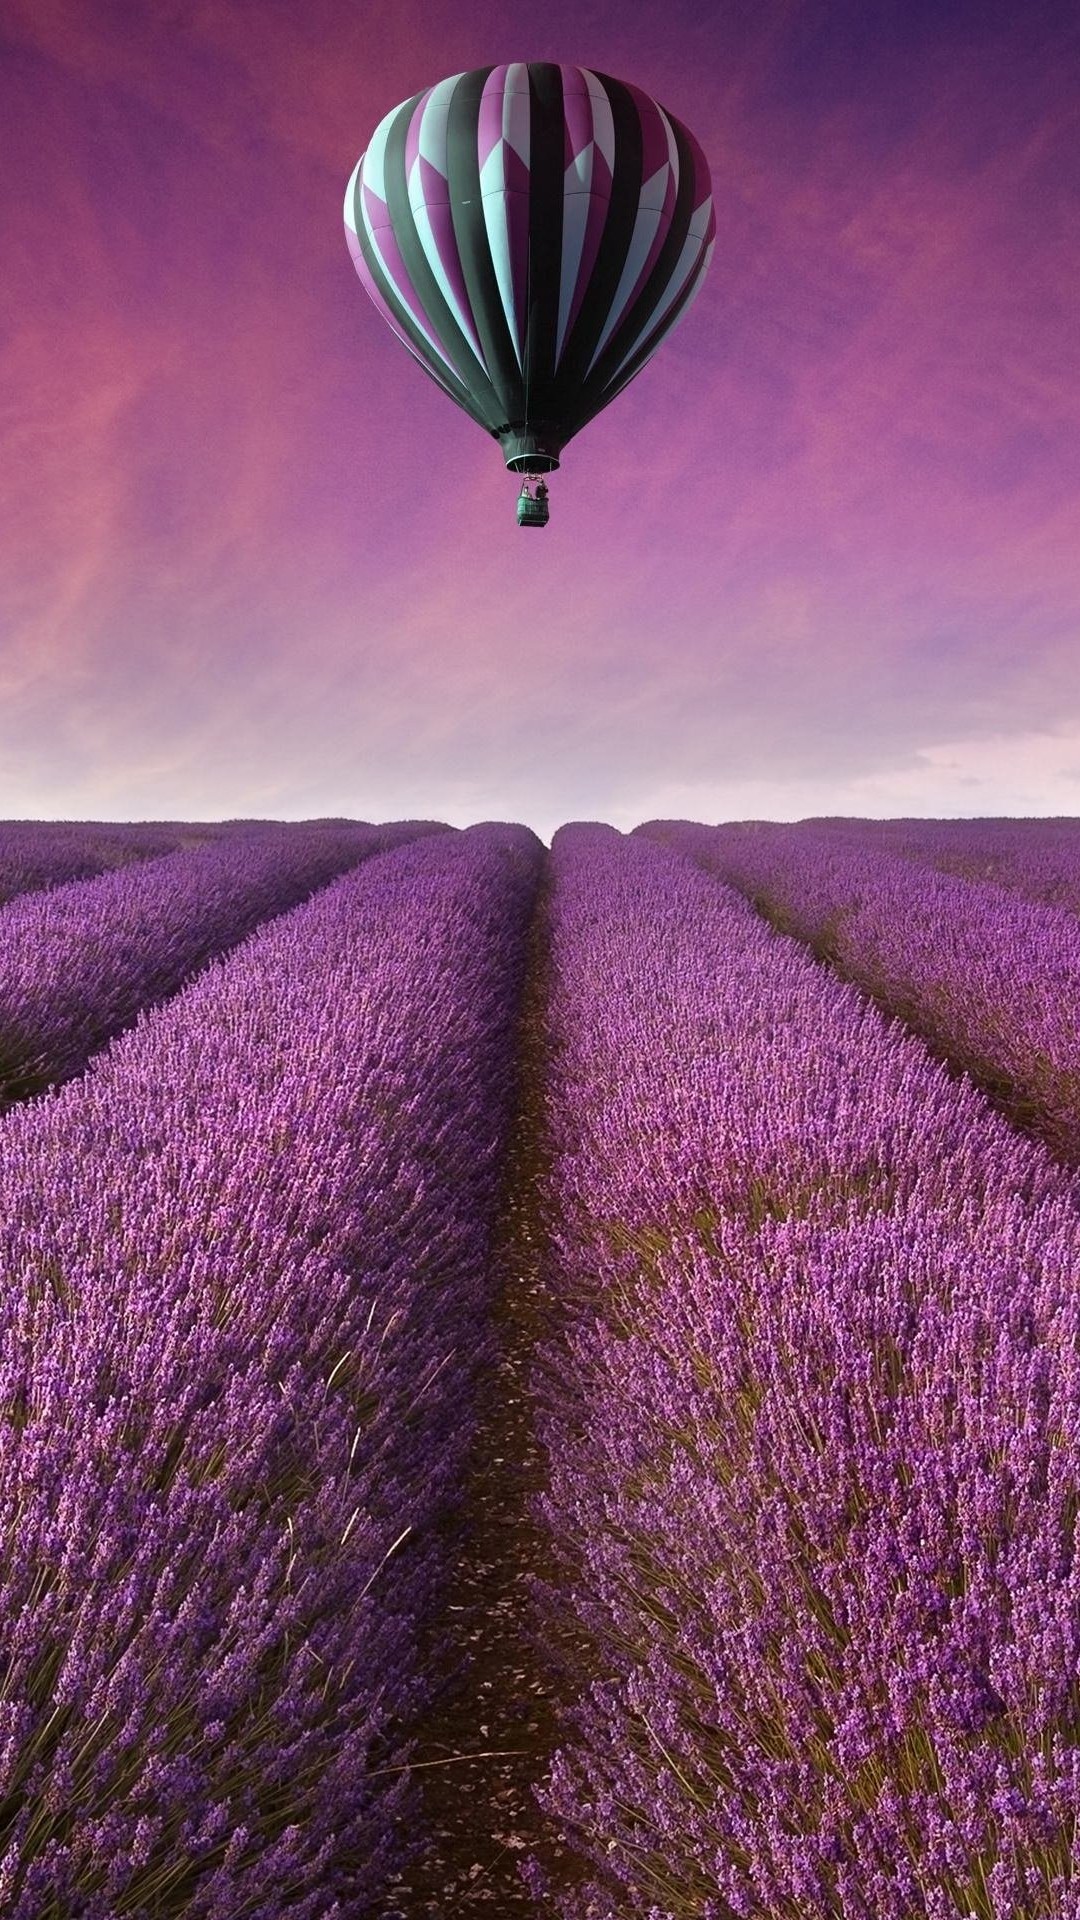 Hot Air Balloon Over Lavender Field Wallpaper for Google Nexus 5X